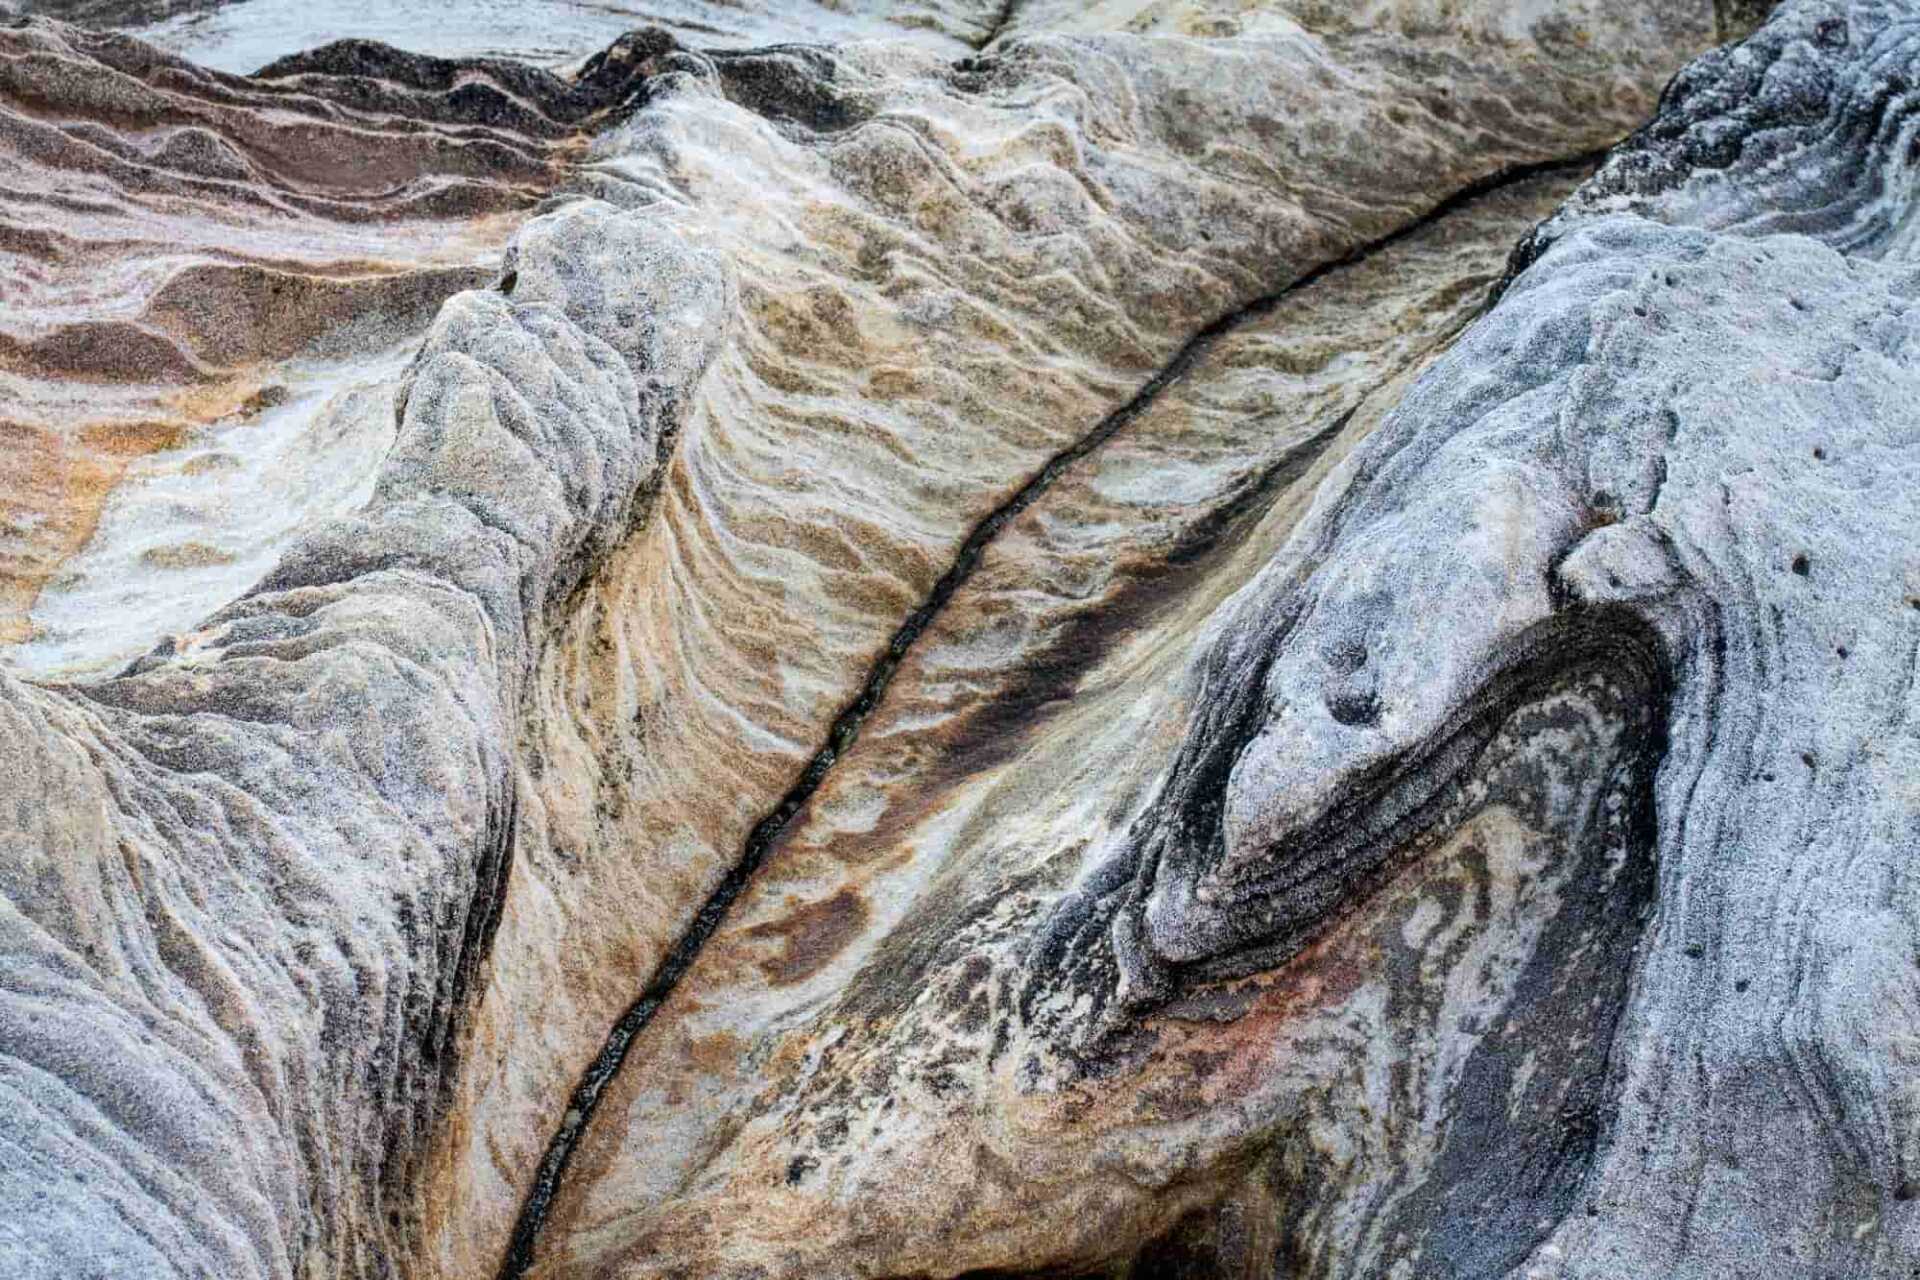 A closeup of swirling patterns on rock